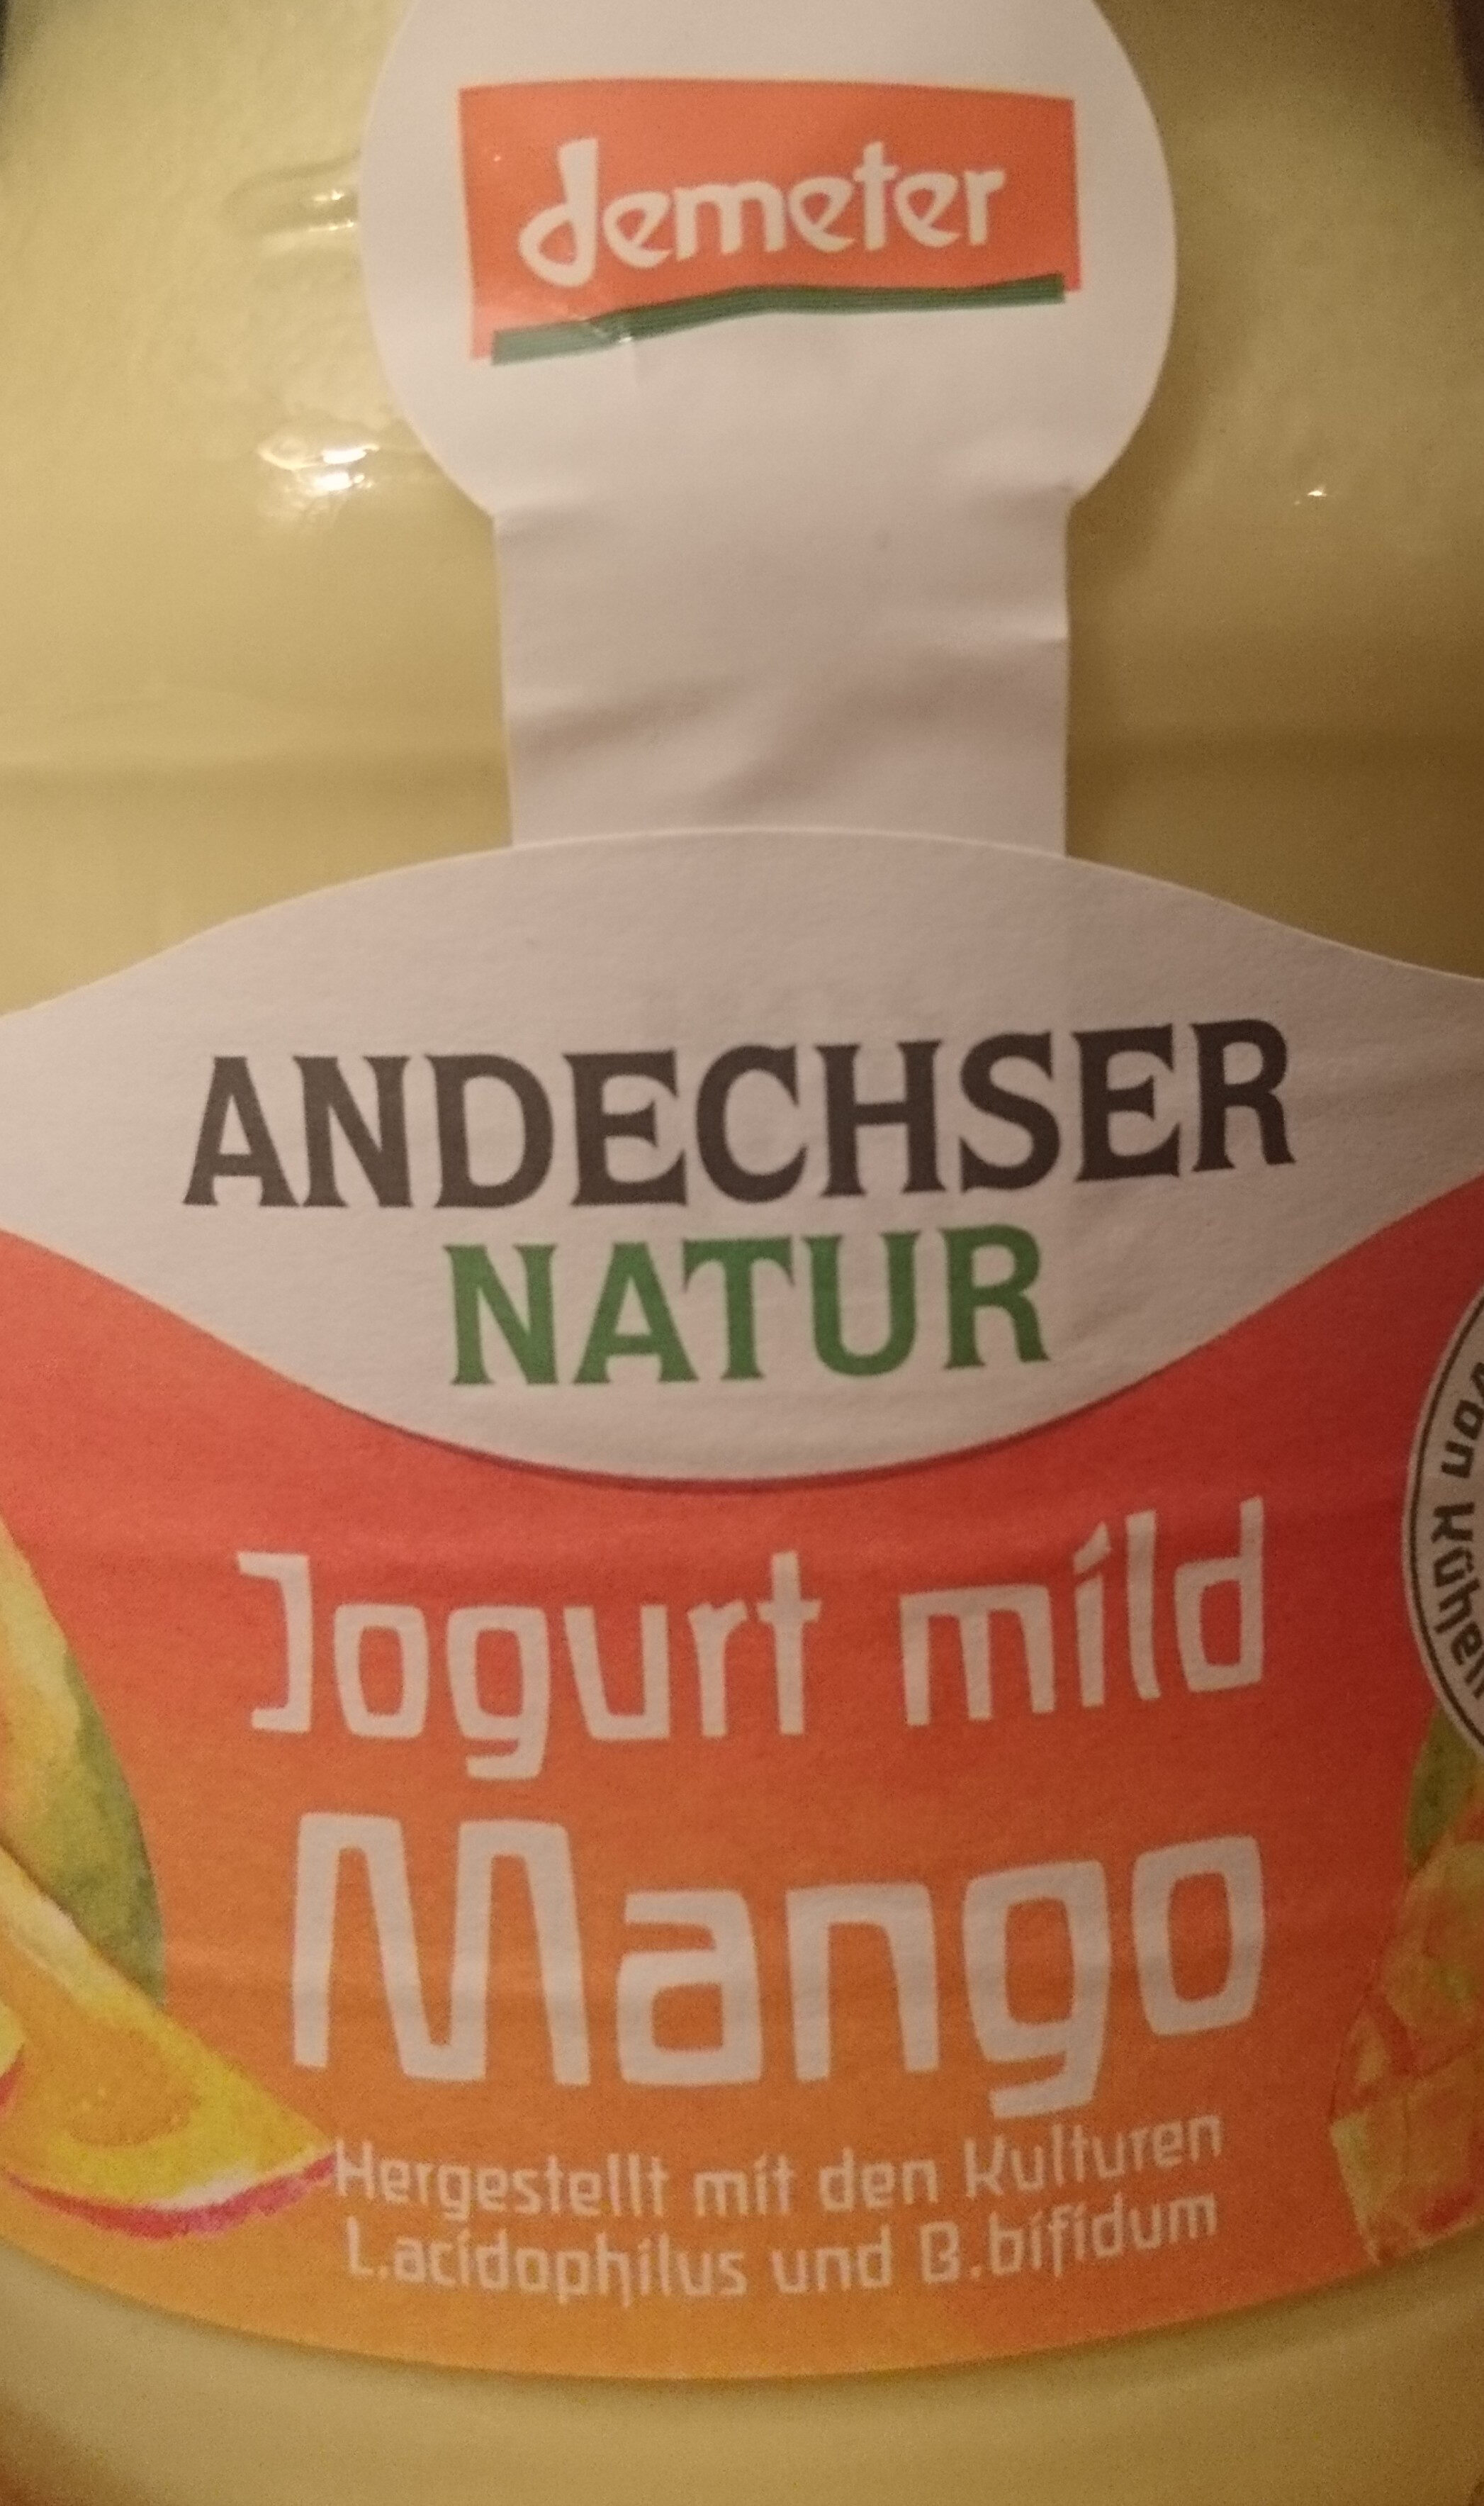 Jogurt mild Mango - Product - de